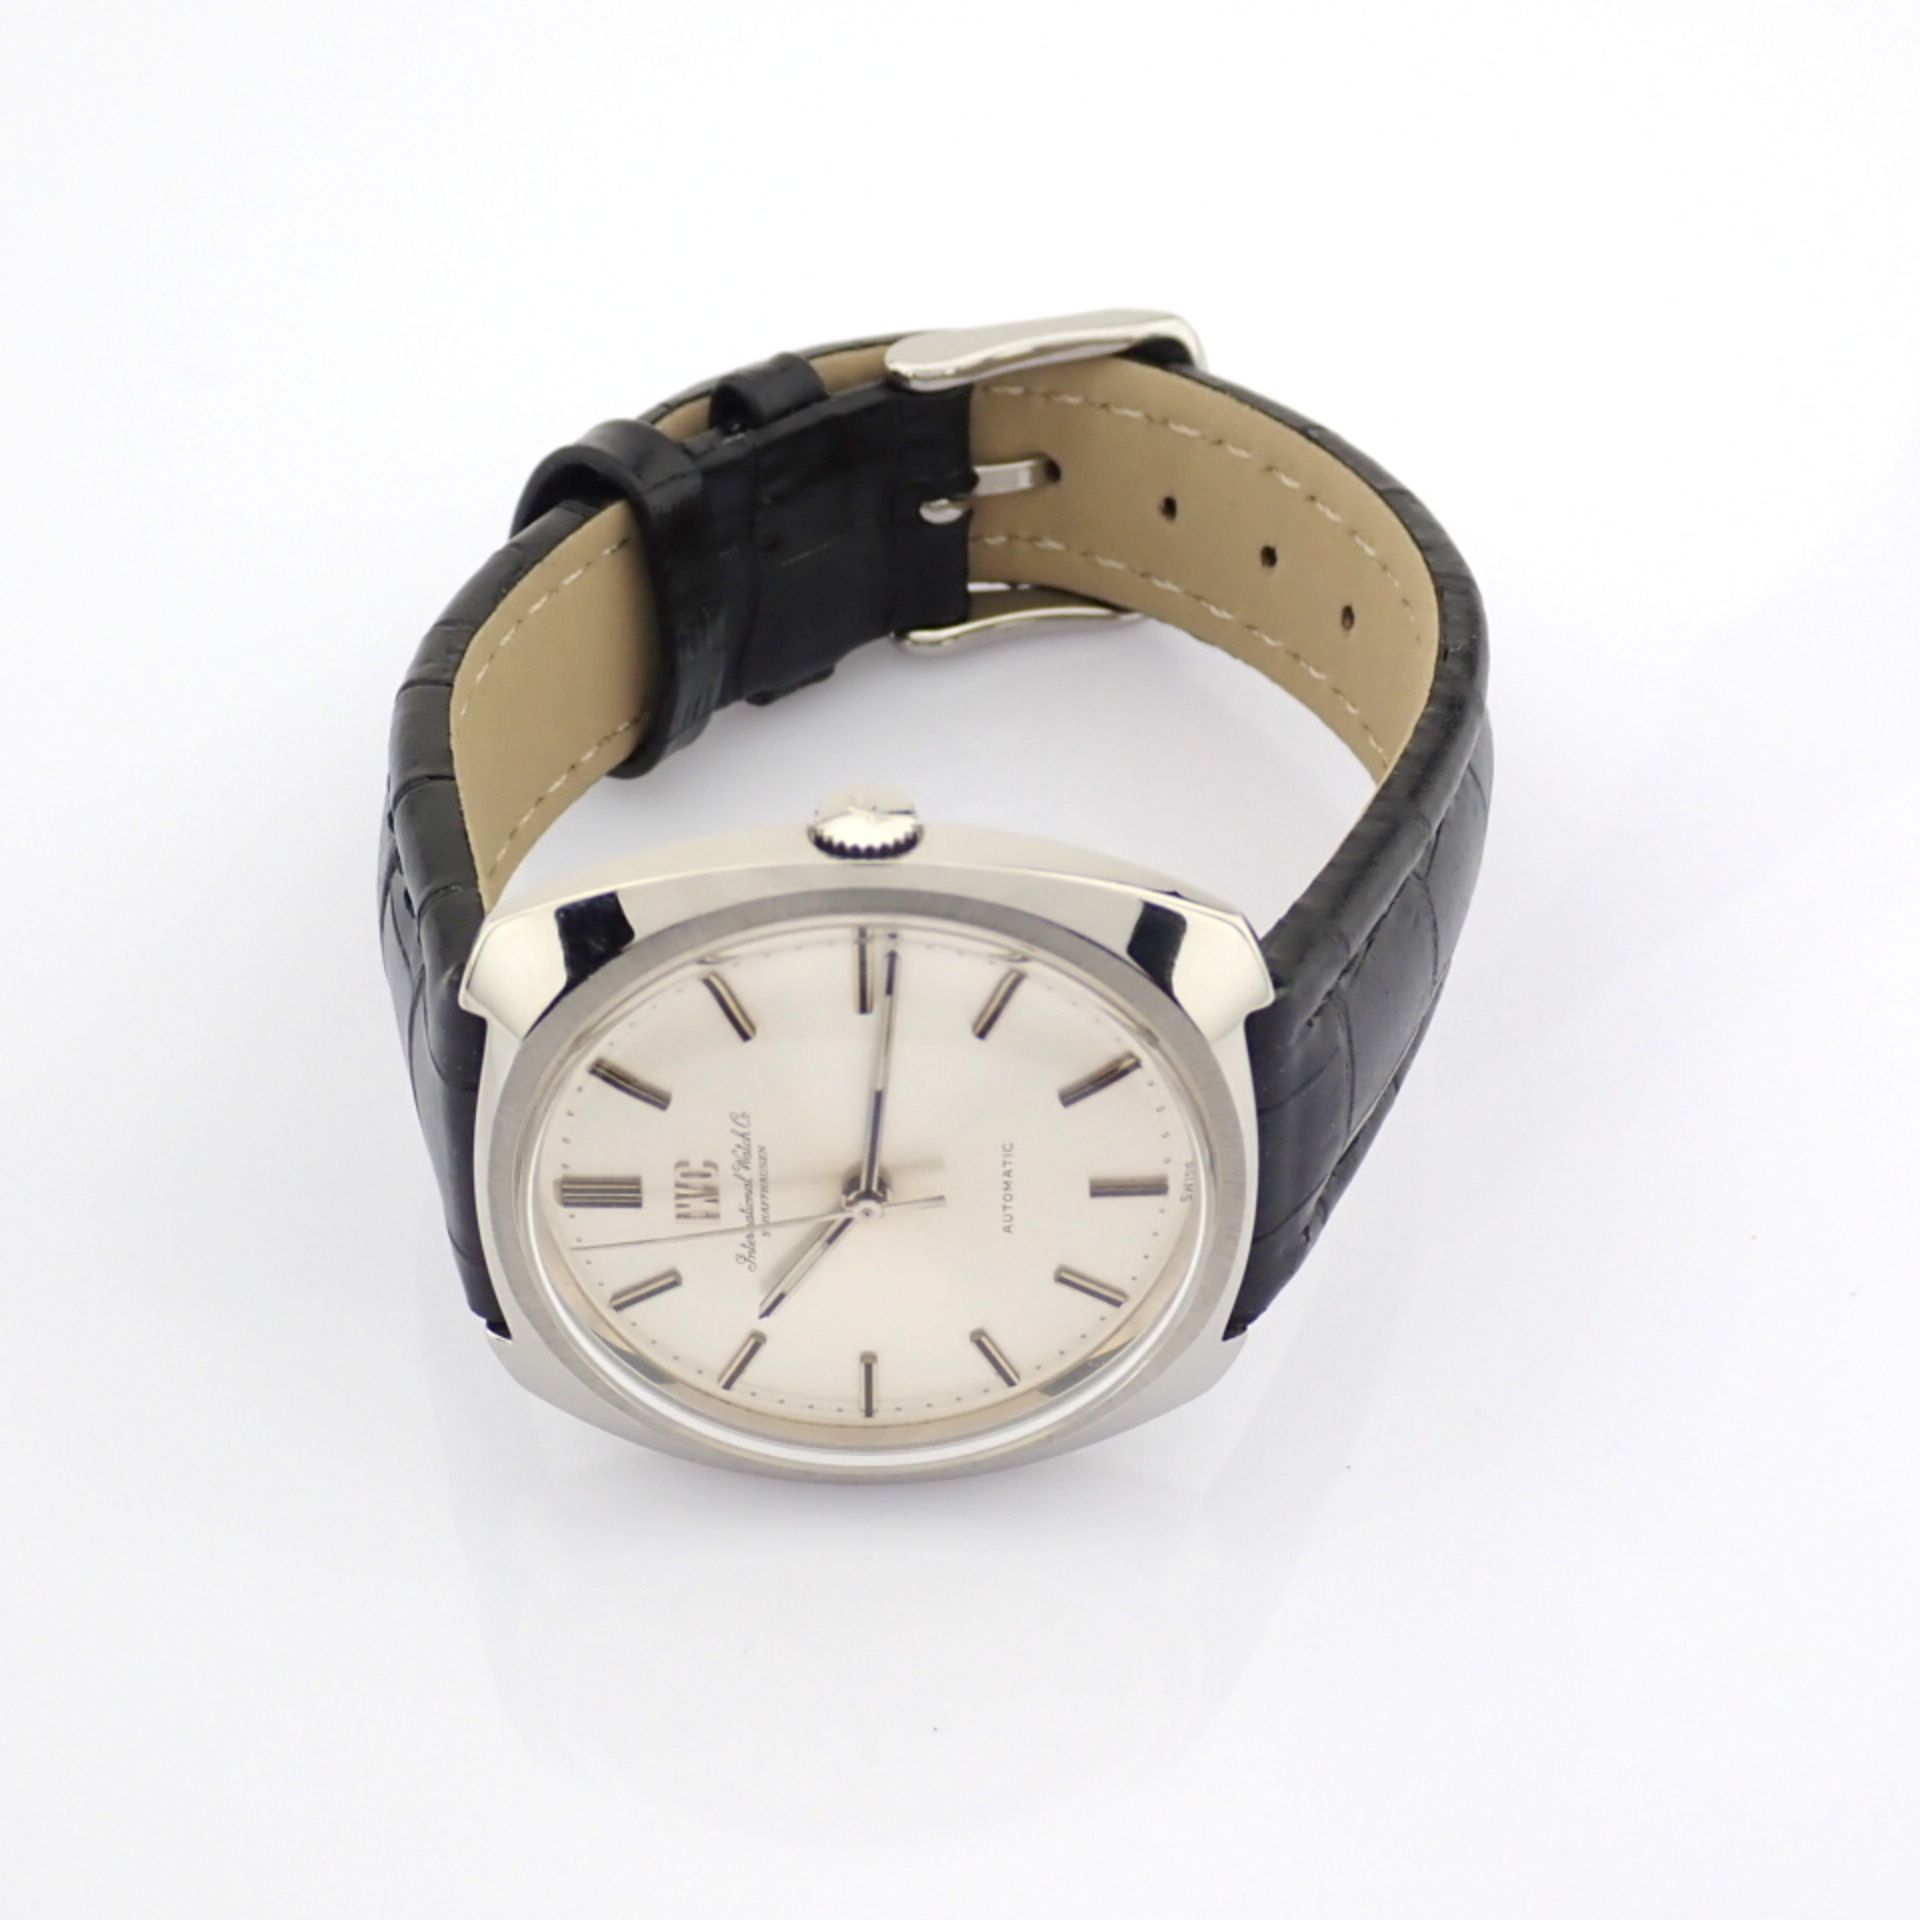 IWC / Pellaton (Rare) - Gentlmen's Gold-filled Wrist Watch - Image 7 of 14